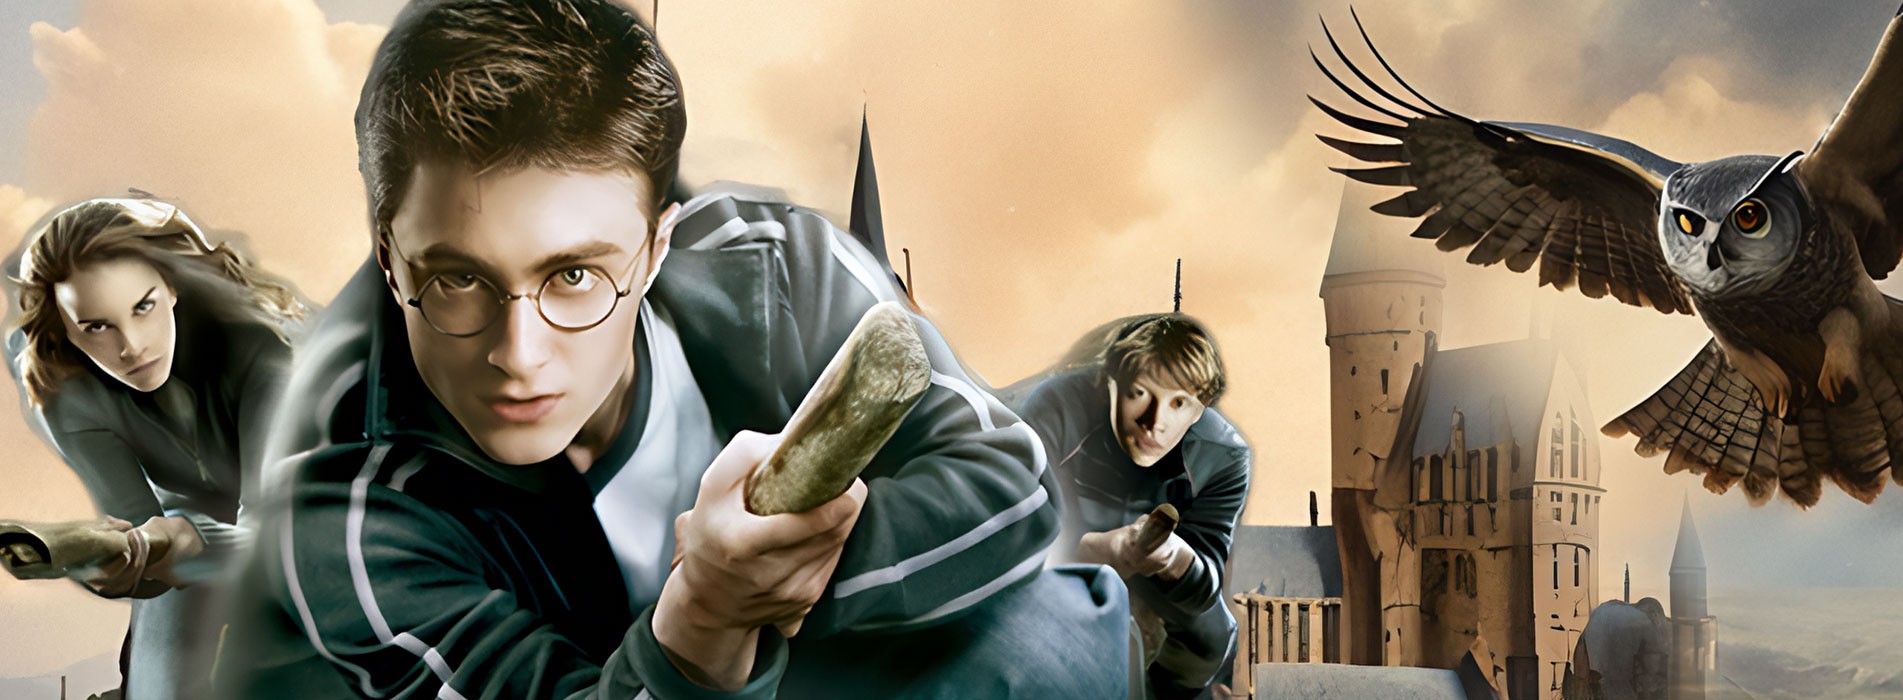 Harry Potter - מוצרי הארי פוטר